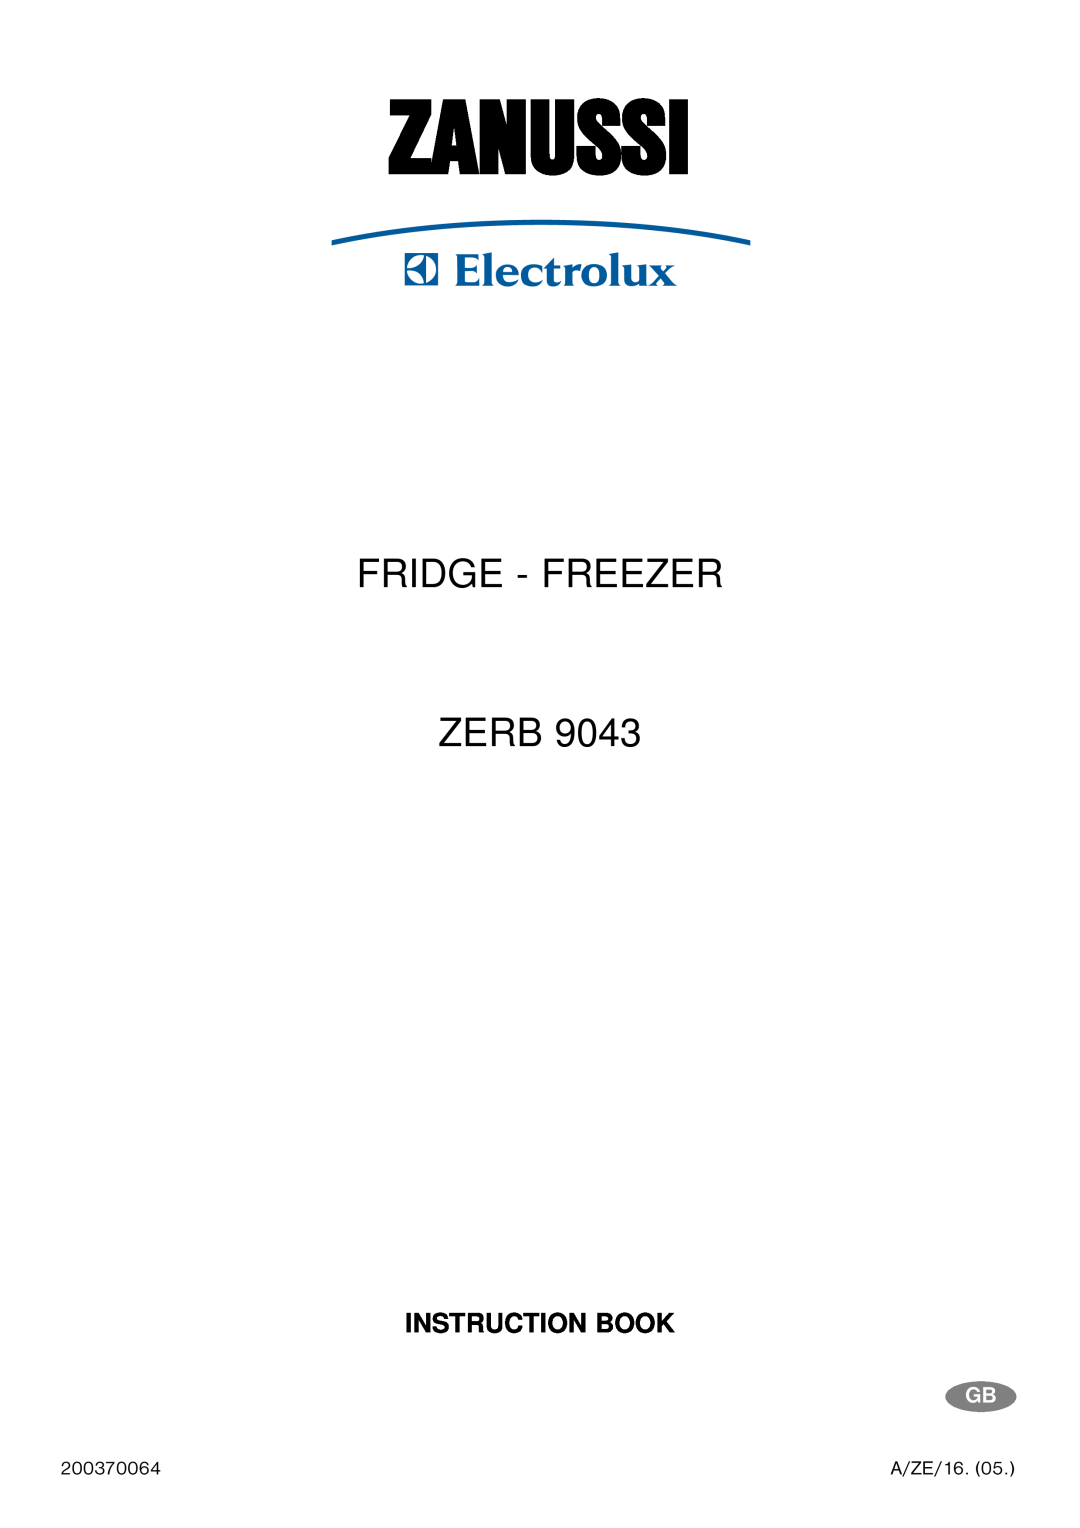 Zanussi ZERB 9043 manual Zanussi, Fridge - Freezer Zerb, Instruction Book 